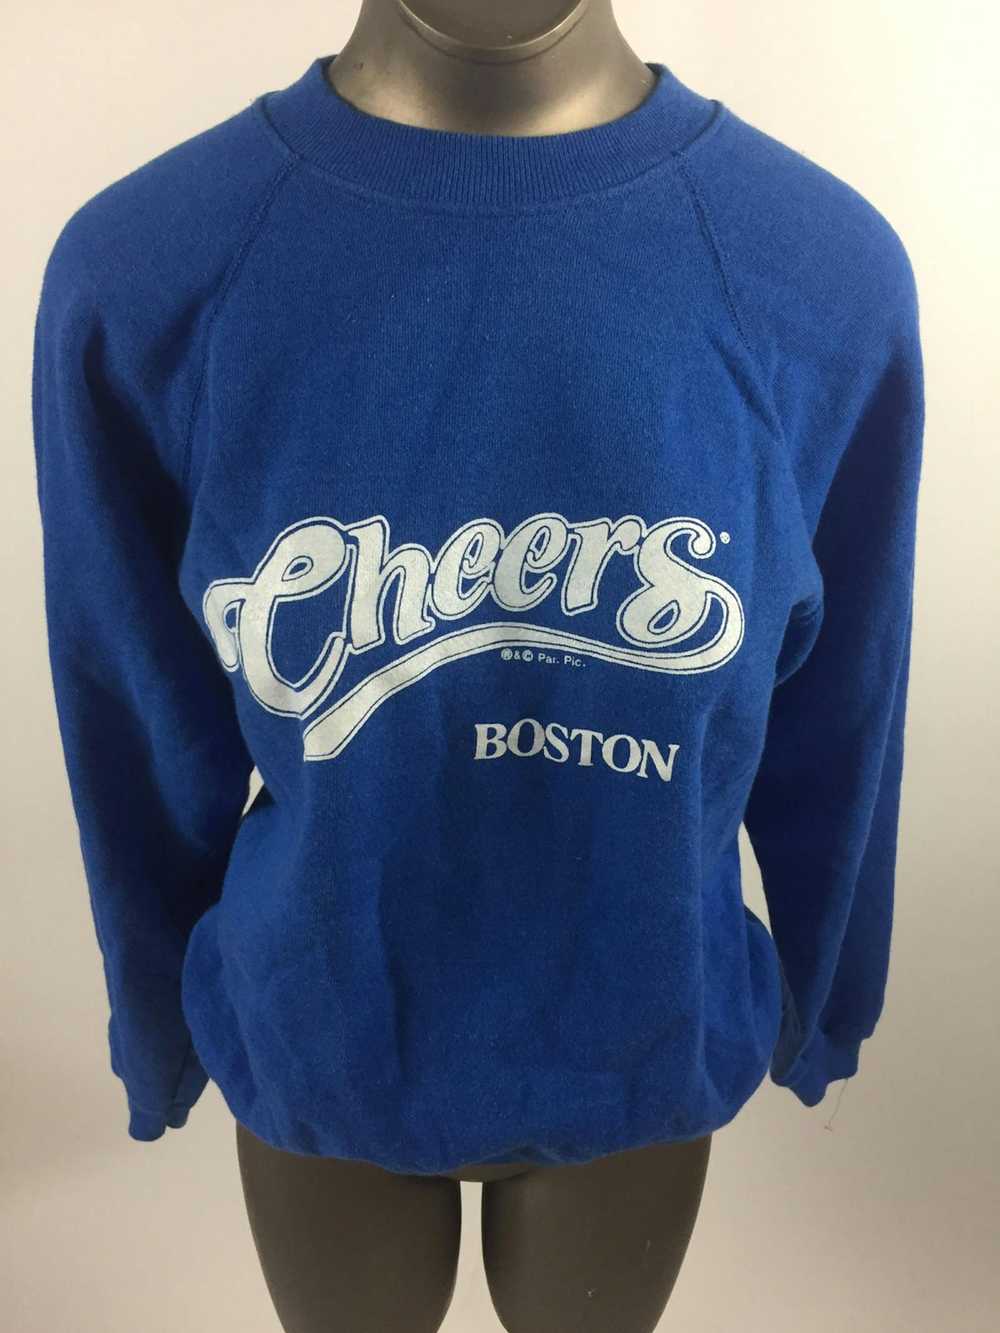 Hanes Vintage Hanes Cheers Boston Sweater - image 1